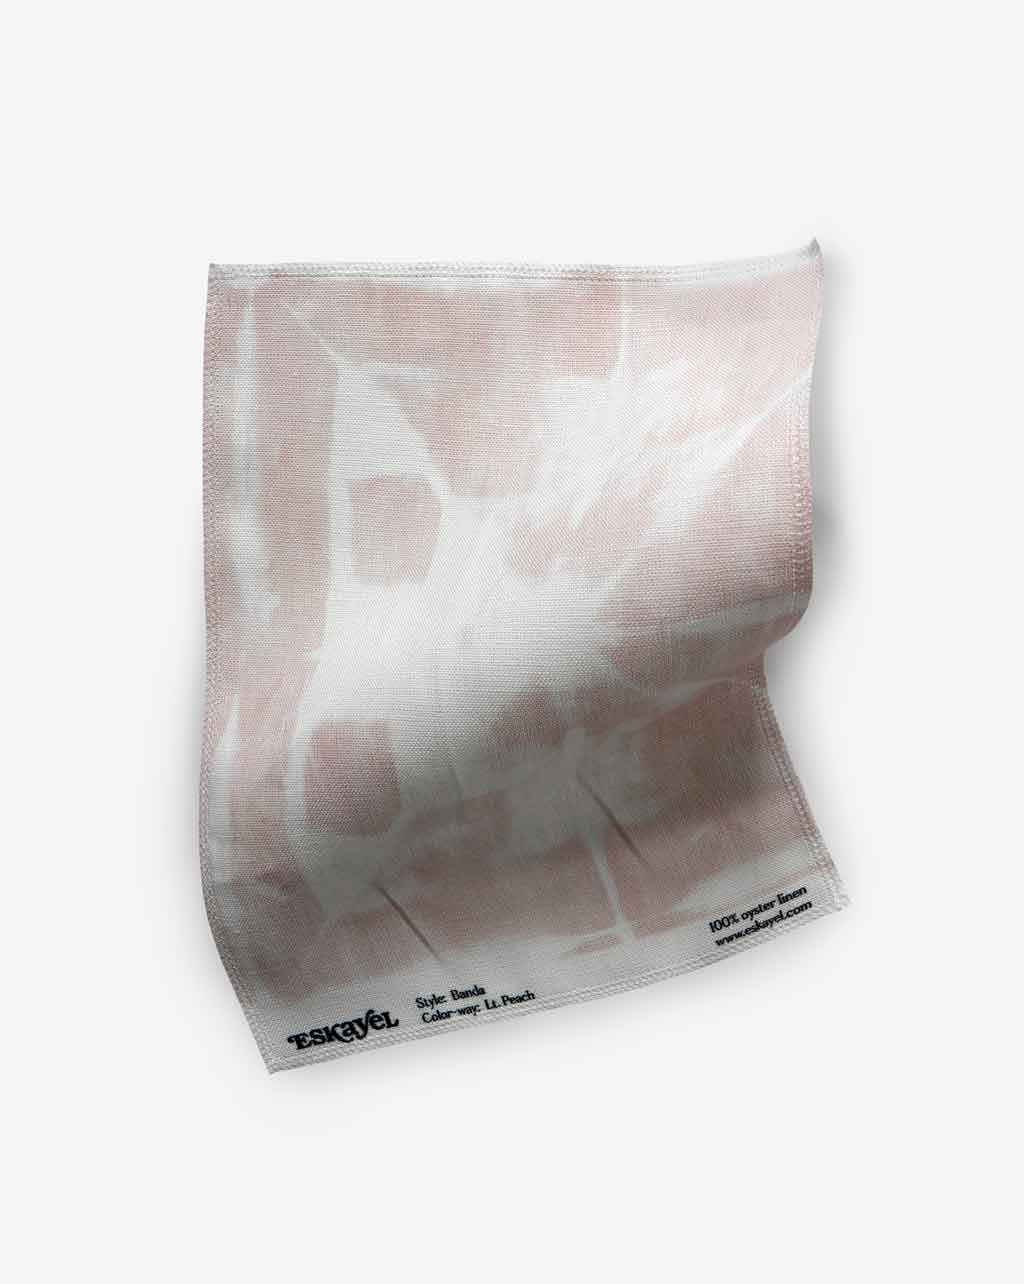 A Banda Fabric Light Peach tie-dye technique on a white surface